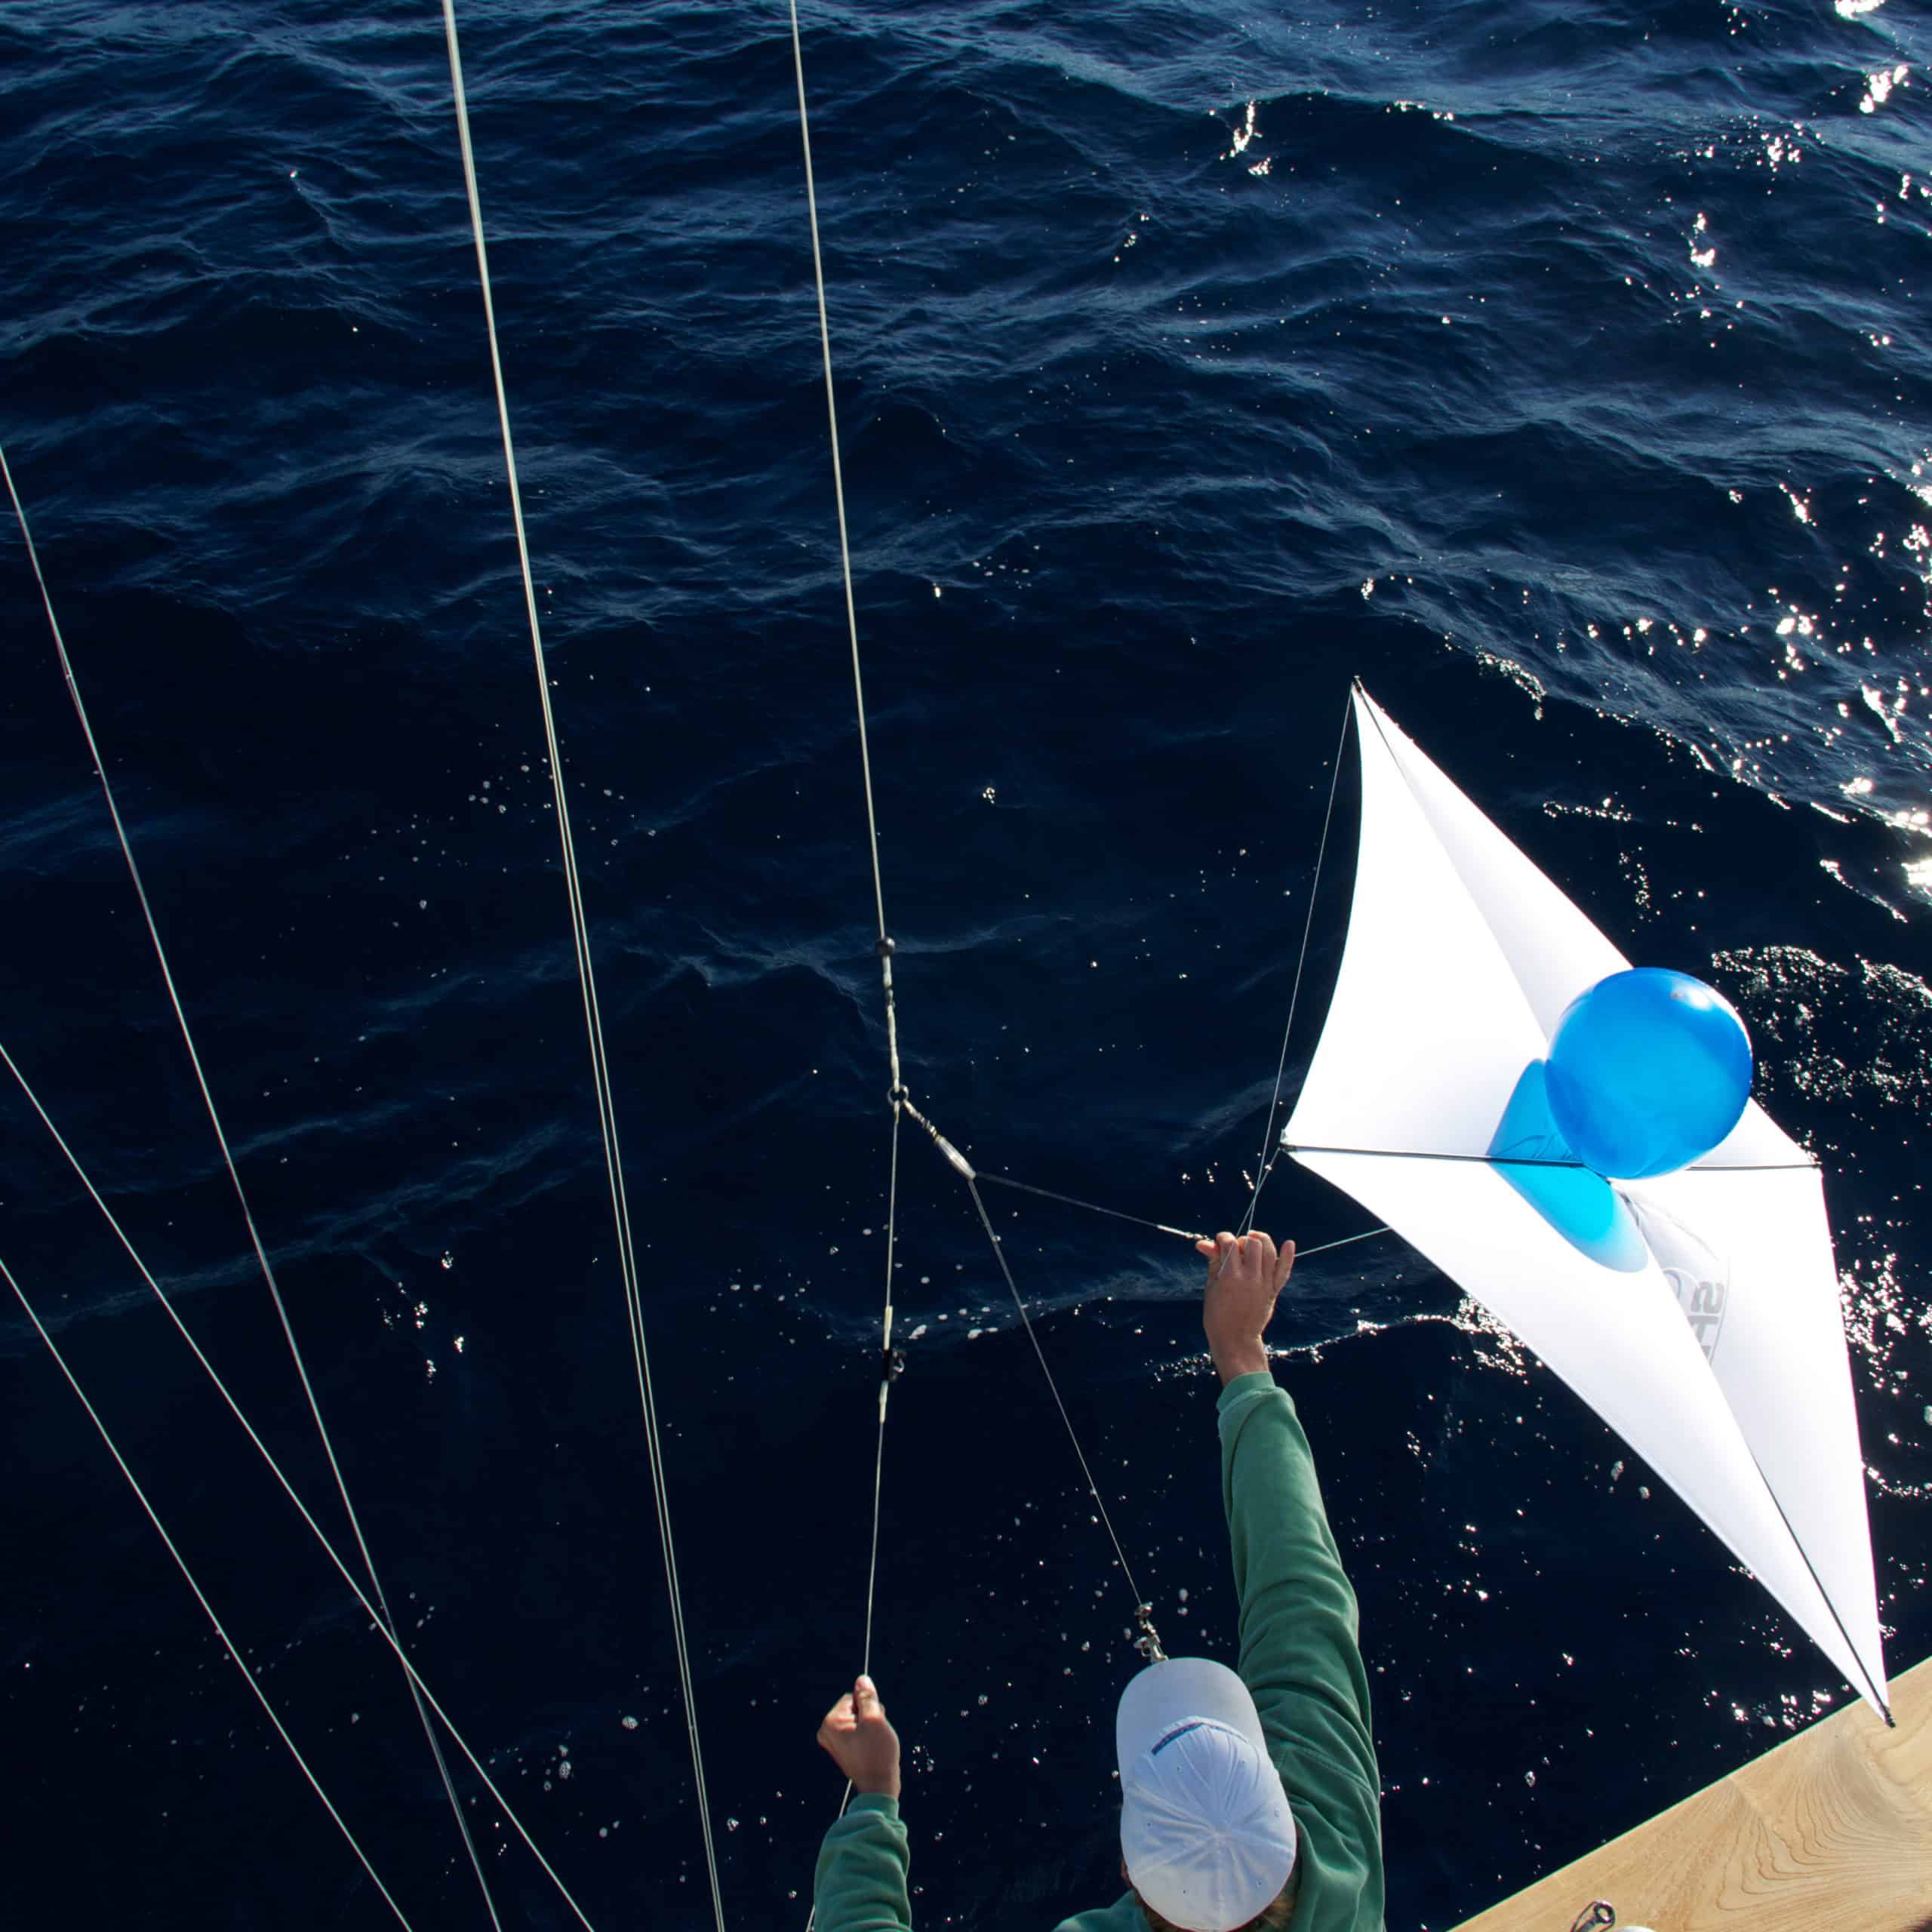 Kite-Fishing Tips From Big Boat